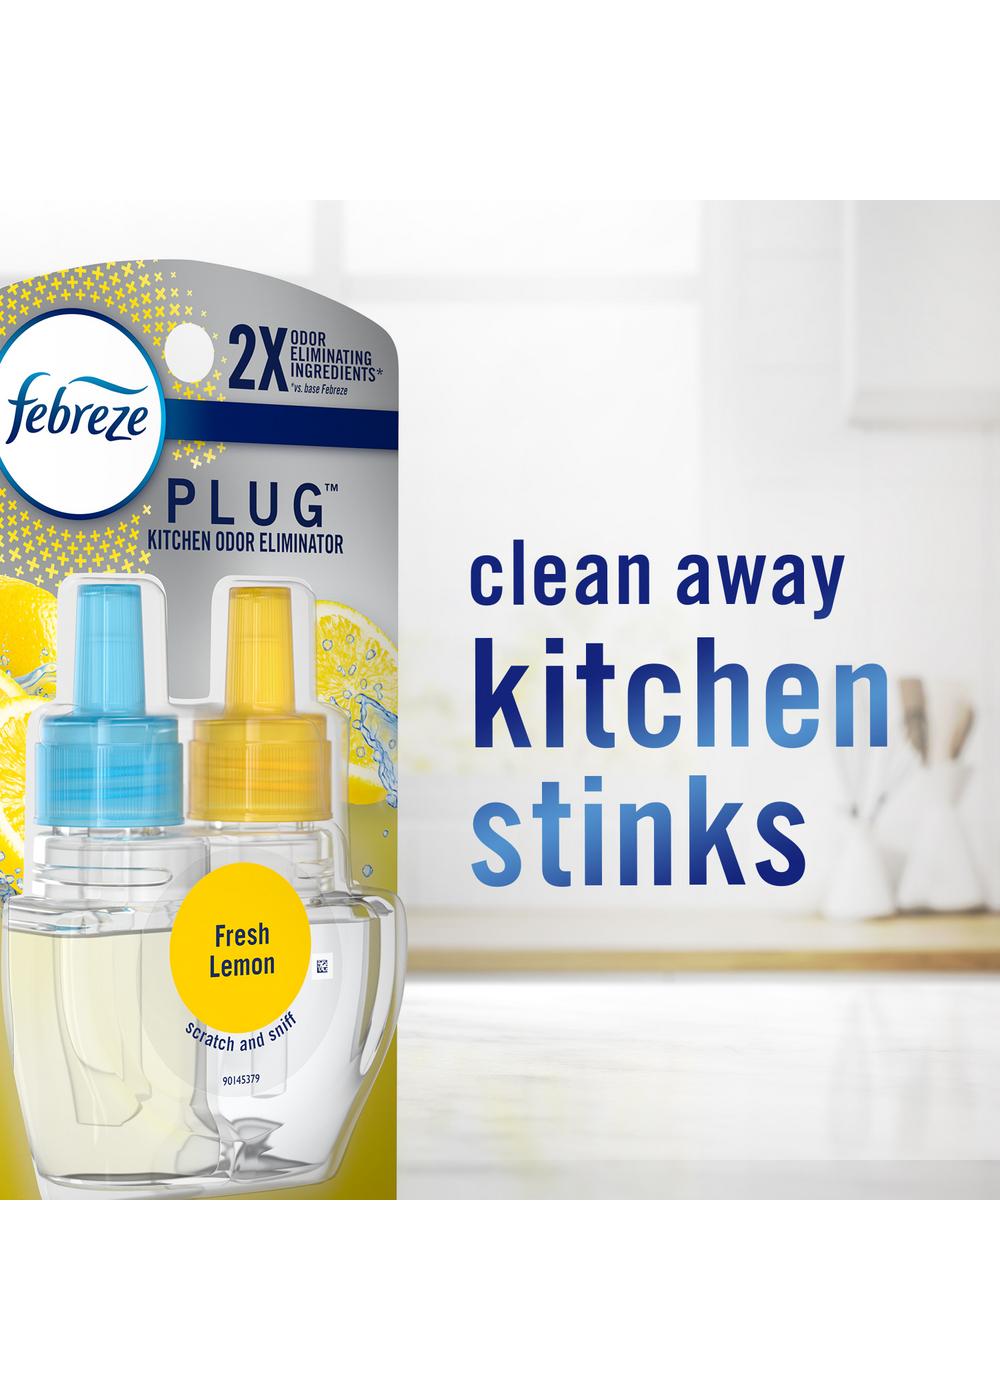 Febreze Plug Kitchen Odor Eliminator Fresh Lemon Scented Oil Refills; image 6 of 9